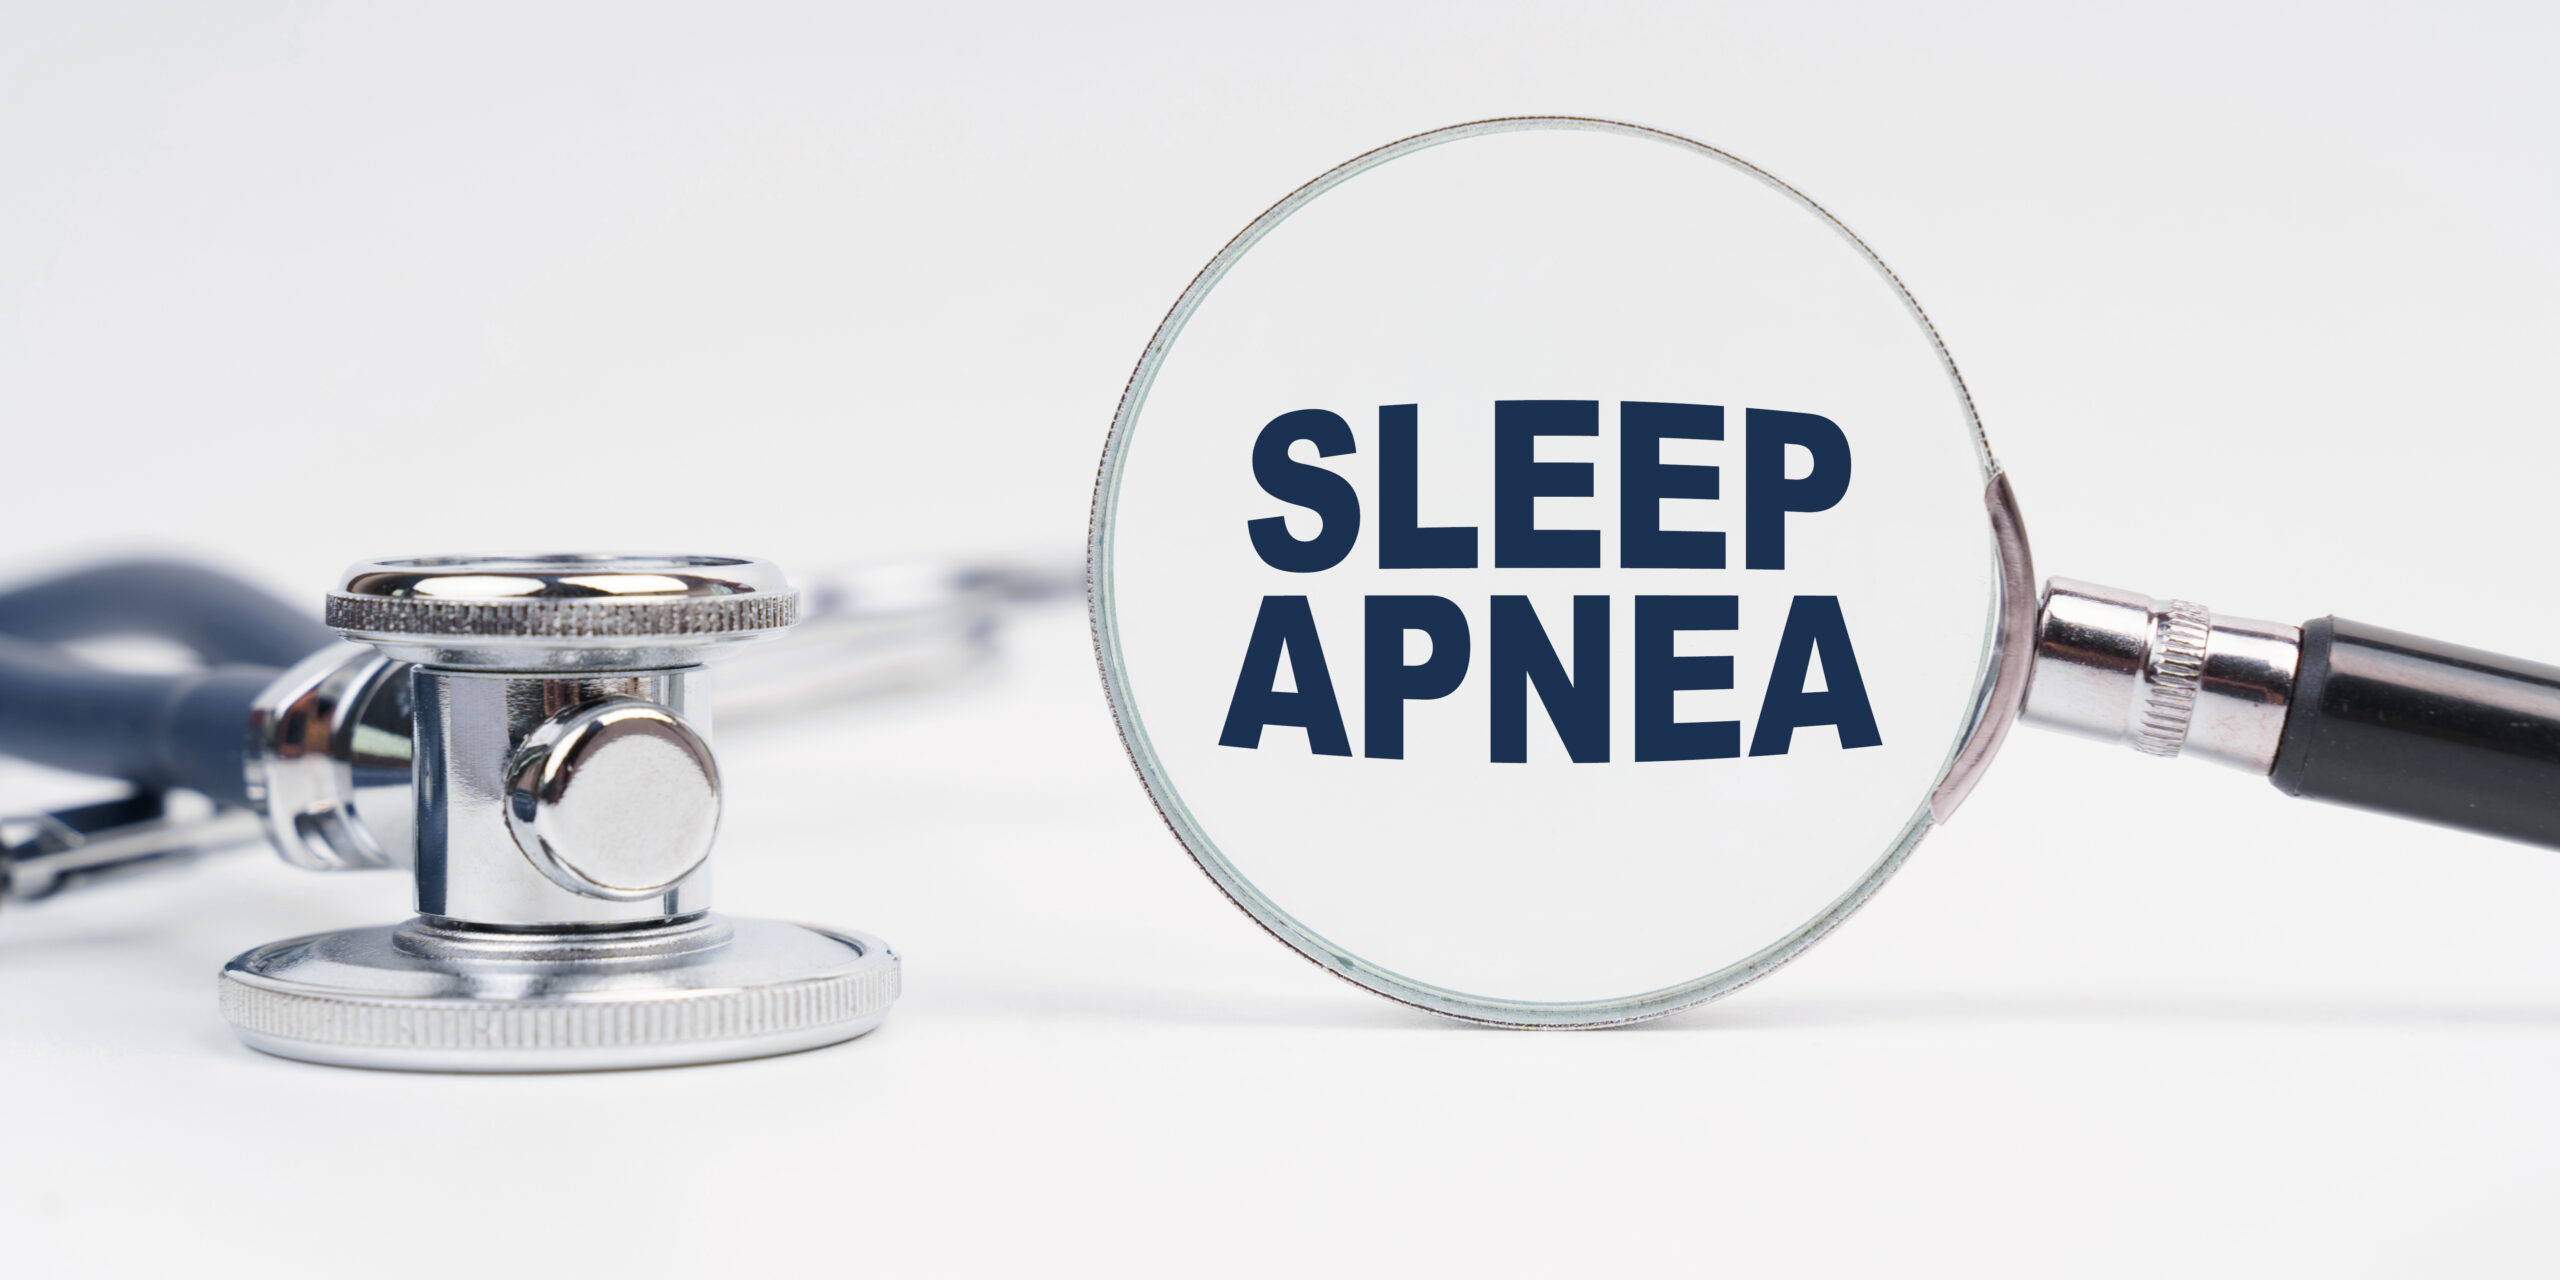 A sleep apnea clinic in New Jersey's stethoscope and magnifying glass with the inscription "Sleep Apnea."